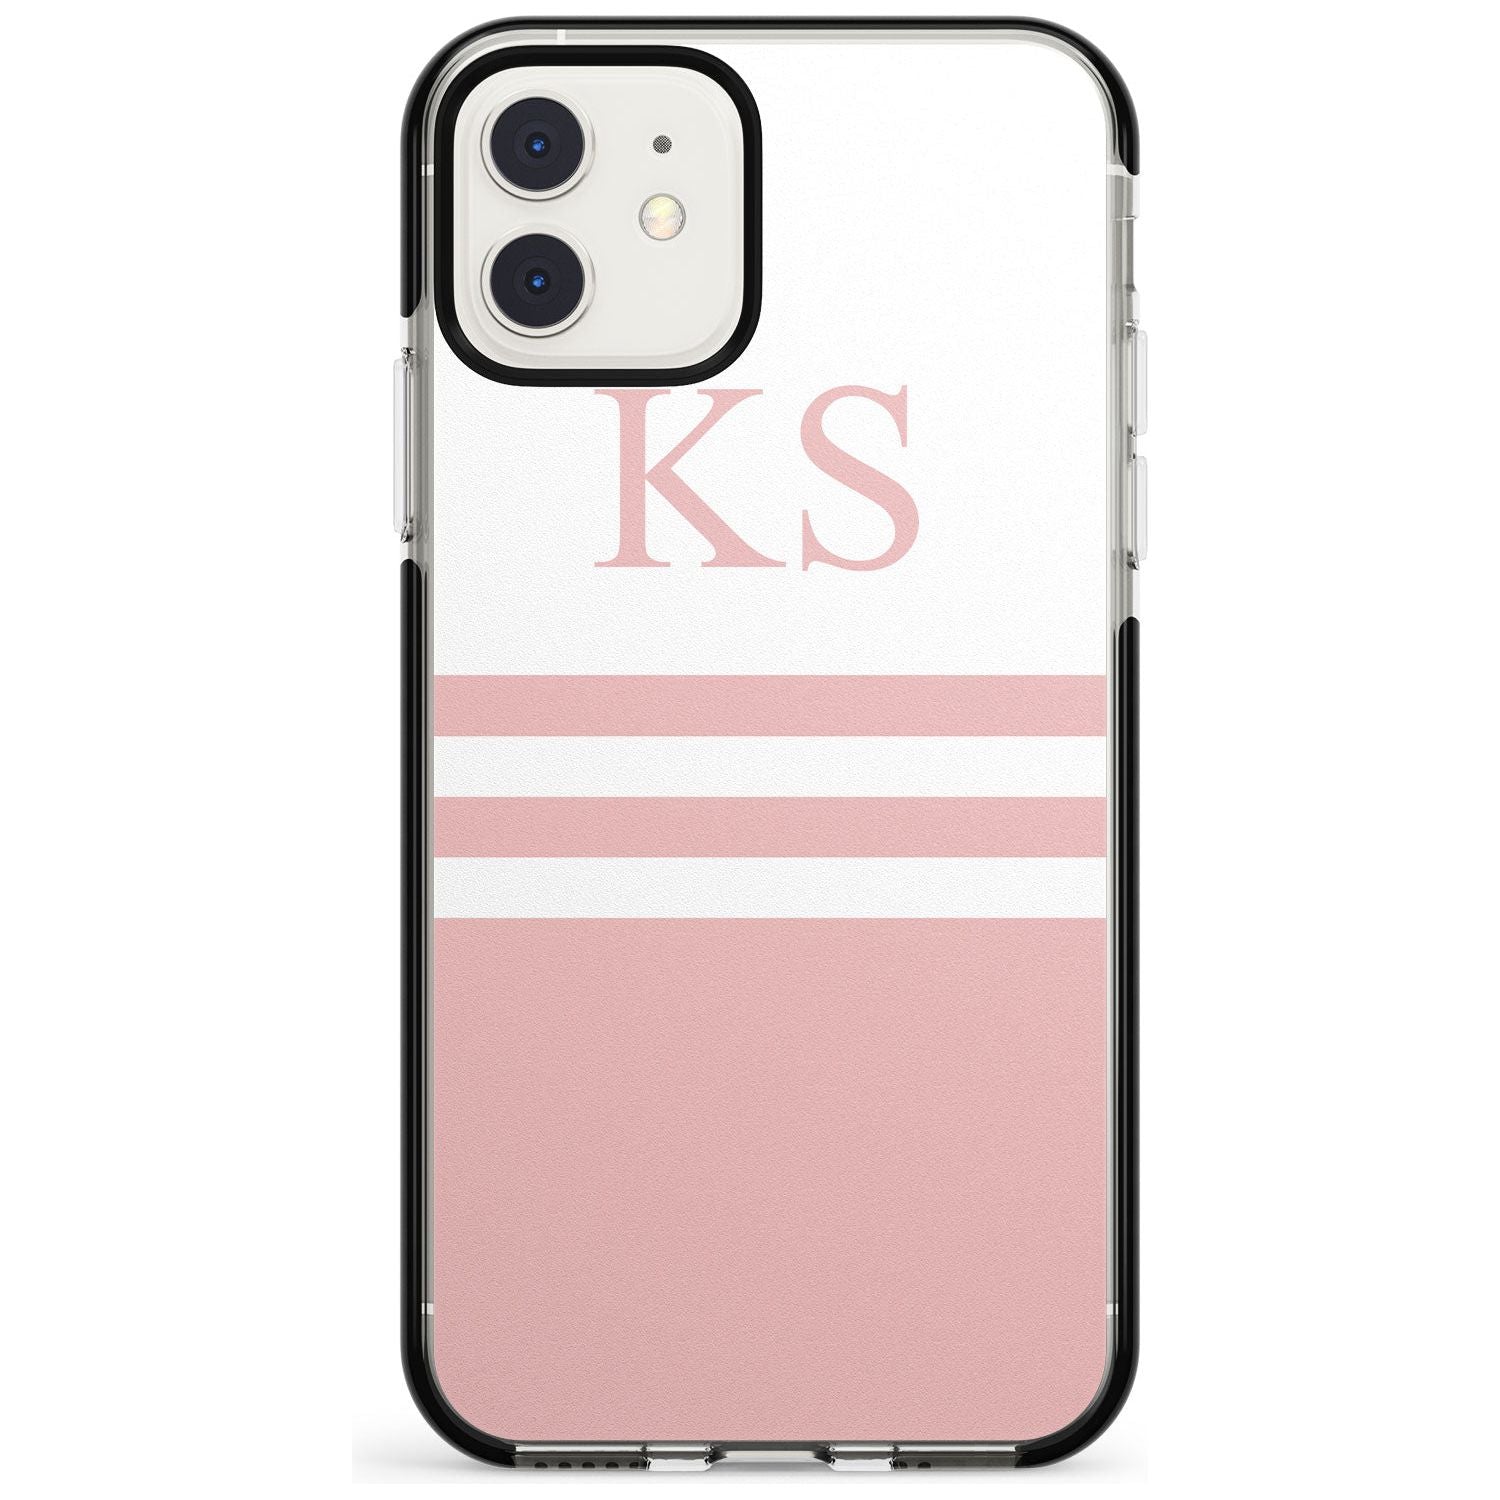 Minimal Pink Stripes & Initials iPhone Case  Black Impact Custom Phone Case - Case Warehouse